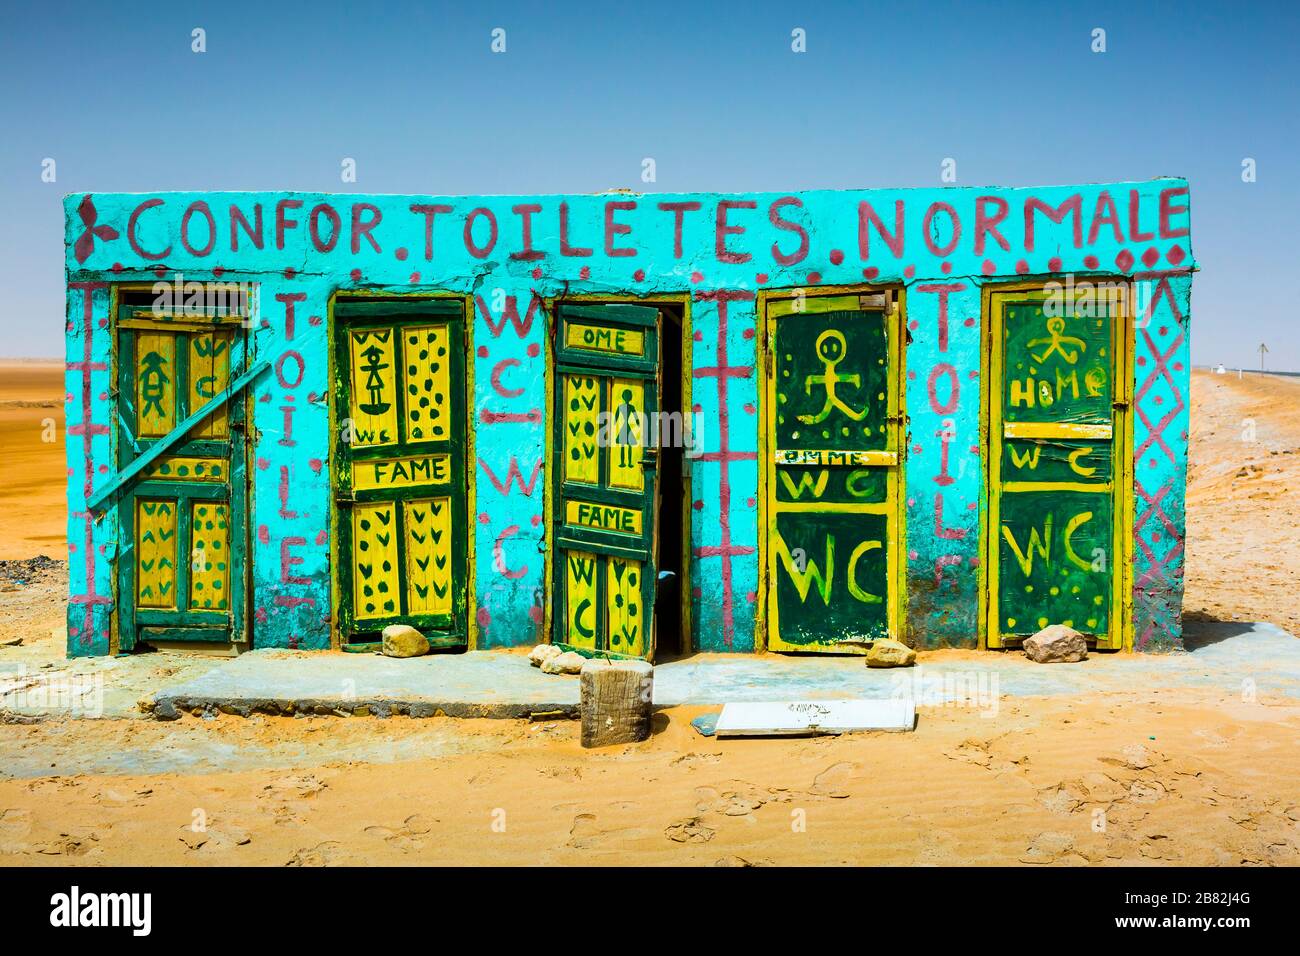 Toilets in a salt lake. Stock Photo